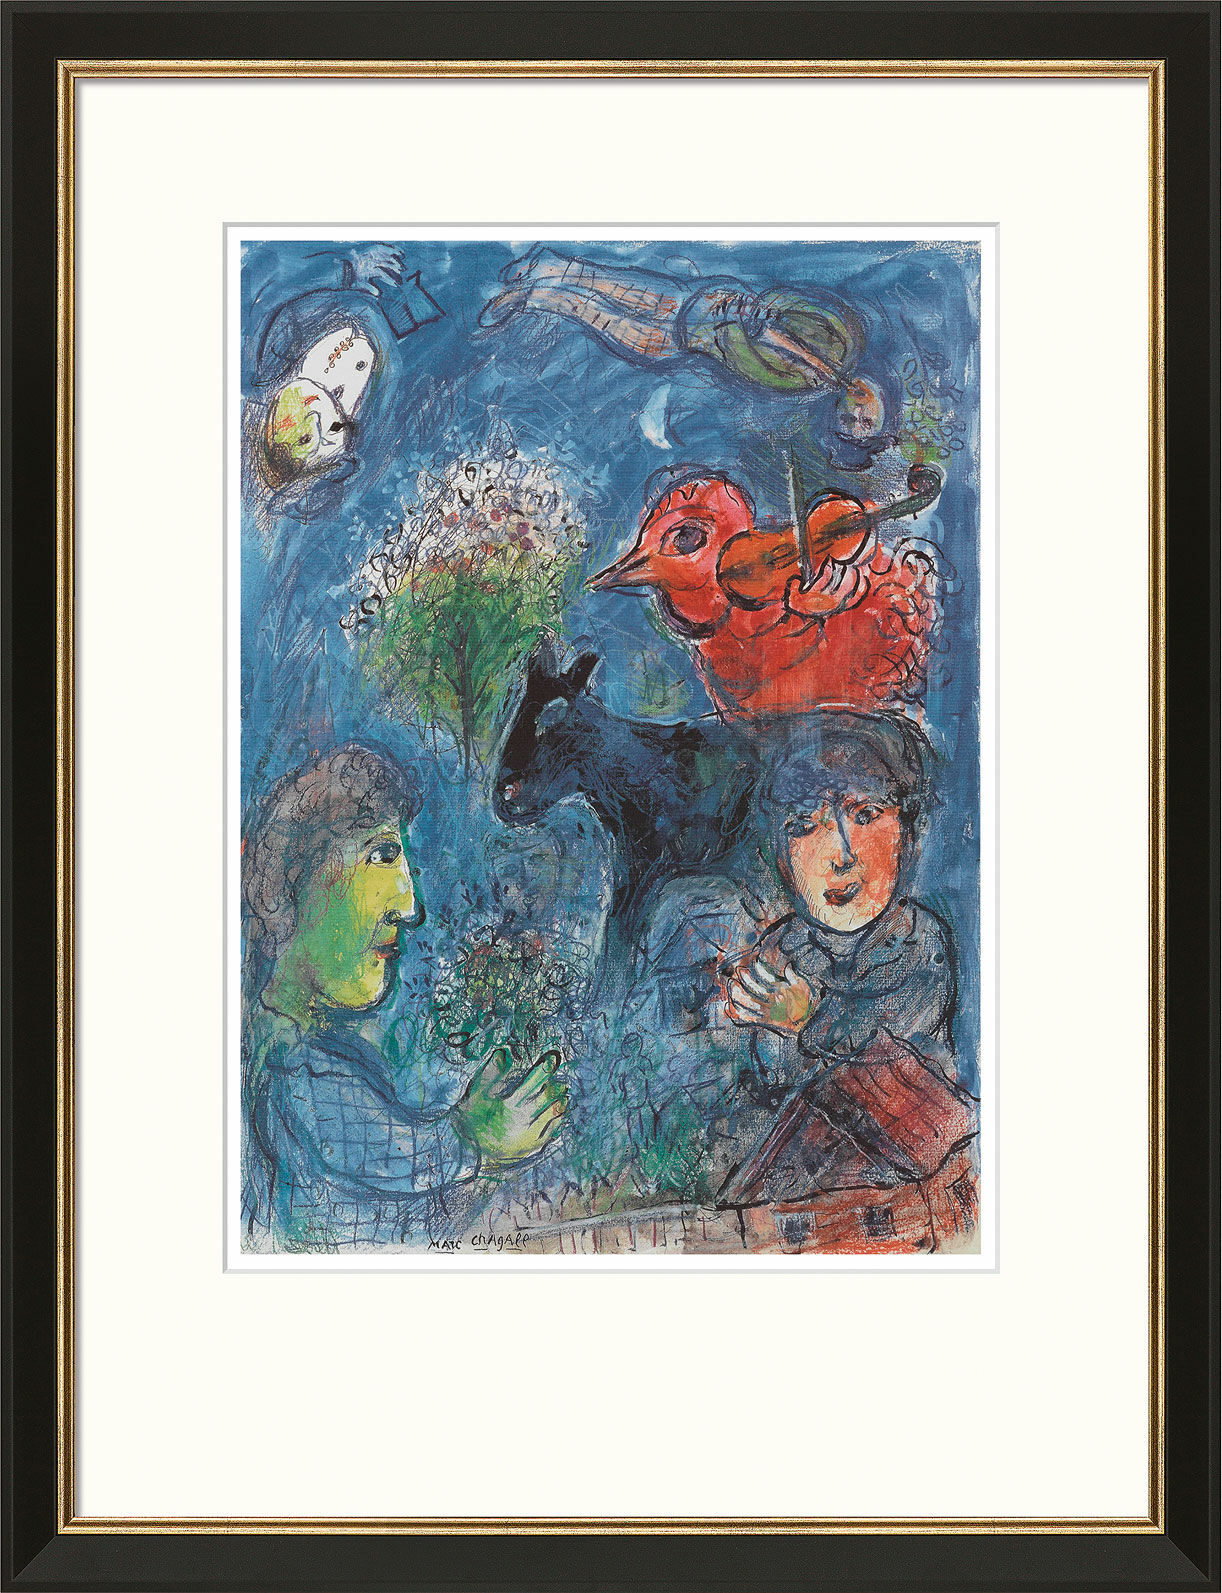 Picture "L'été", framed by Marc Chagall